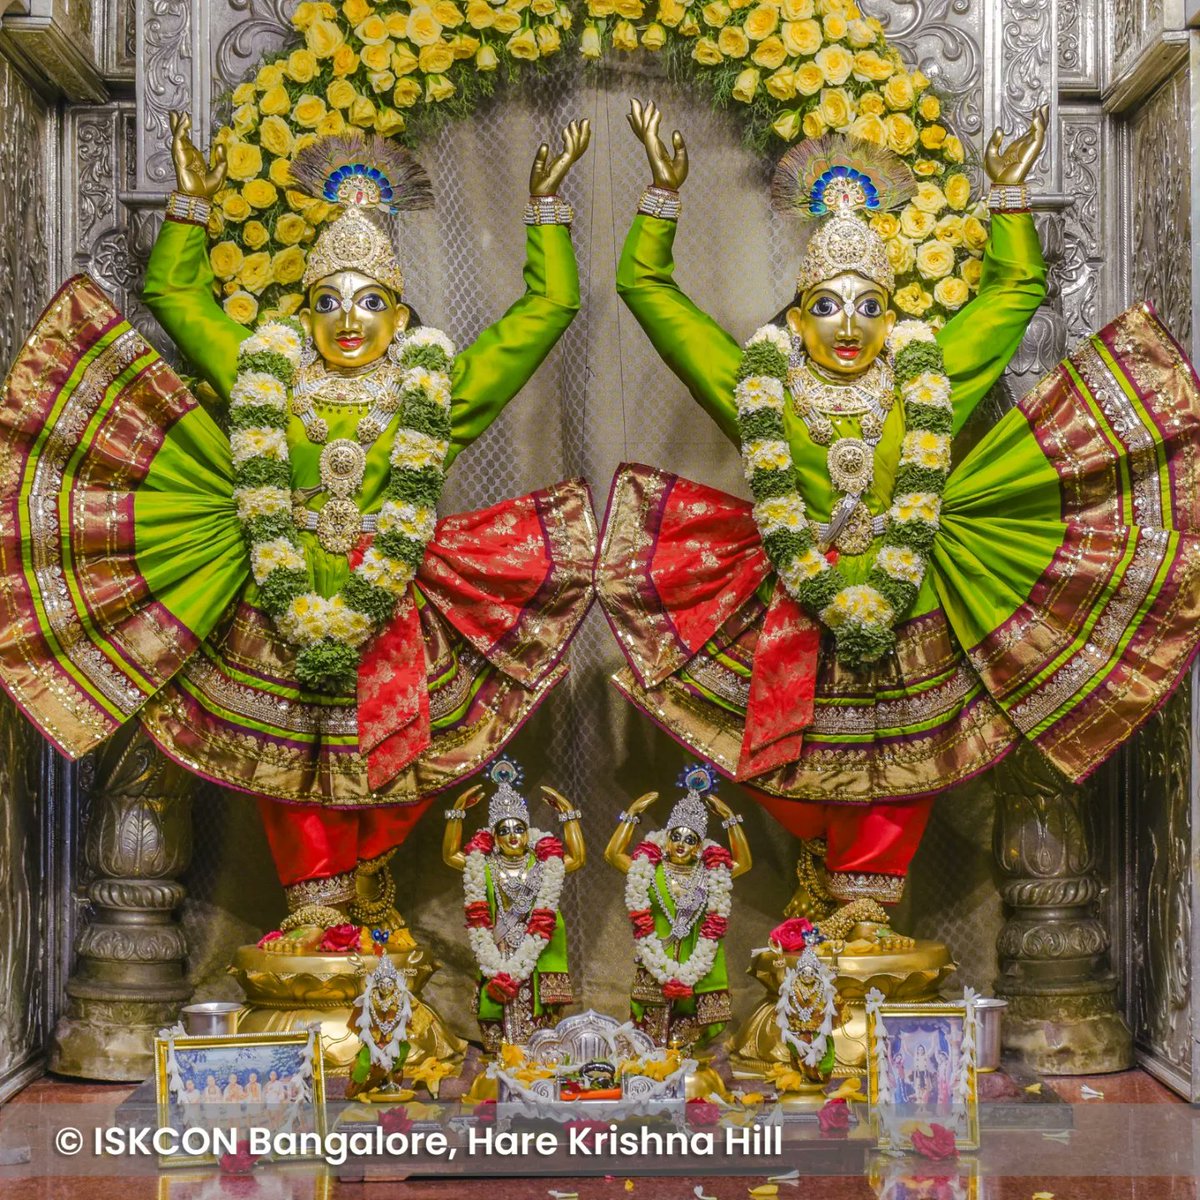 Daily darshan from ISKCON Bangalore temple - May 08, 2024. #ISKCONBangalore #iskcon #DailyDarshan #temple #krishna #radhakrishna #trending #diwali #krishnalove #darshan #hkhill #vkhill #iskcontemple #wednesdayvibes #wednesday #wednesdaymotivation #blessings #divine